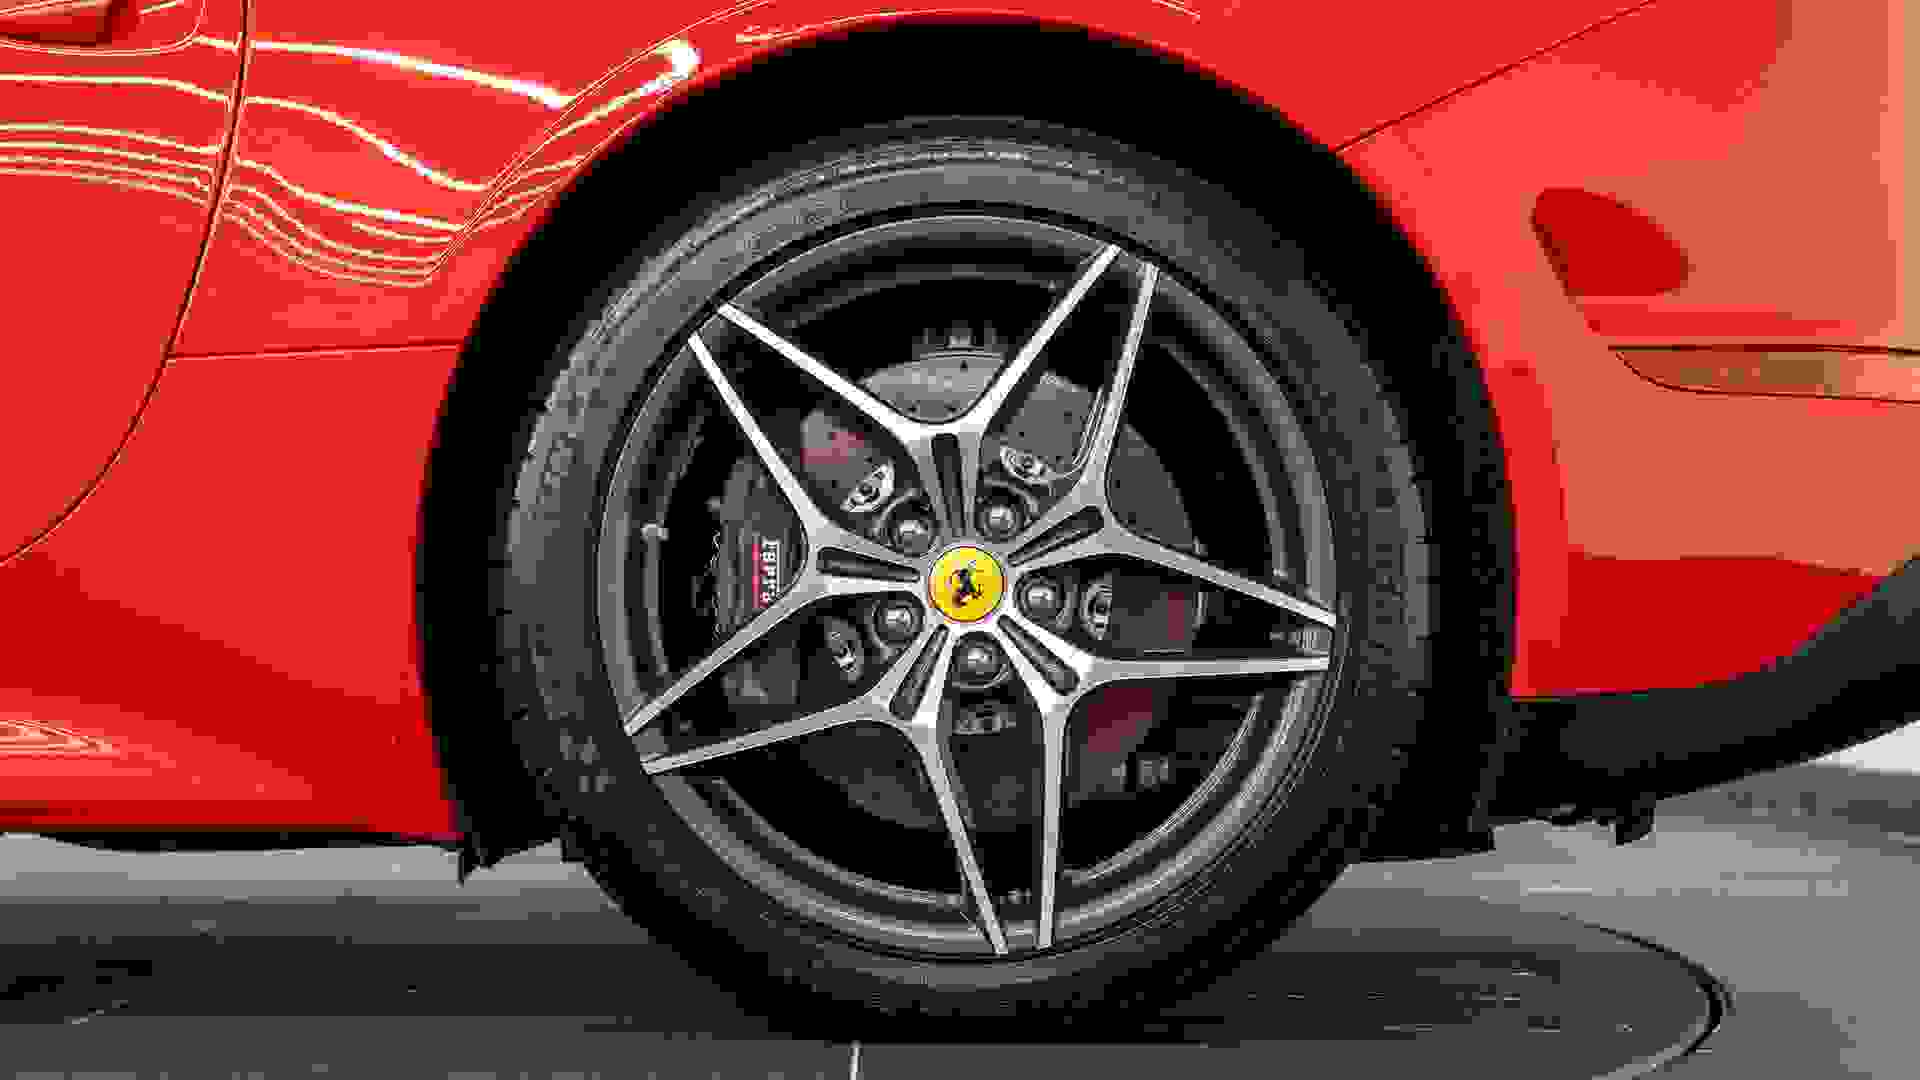 Ferrari California Photo cd6e52db-61b5-41e4-a80b-8f706de4ce35.jpg